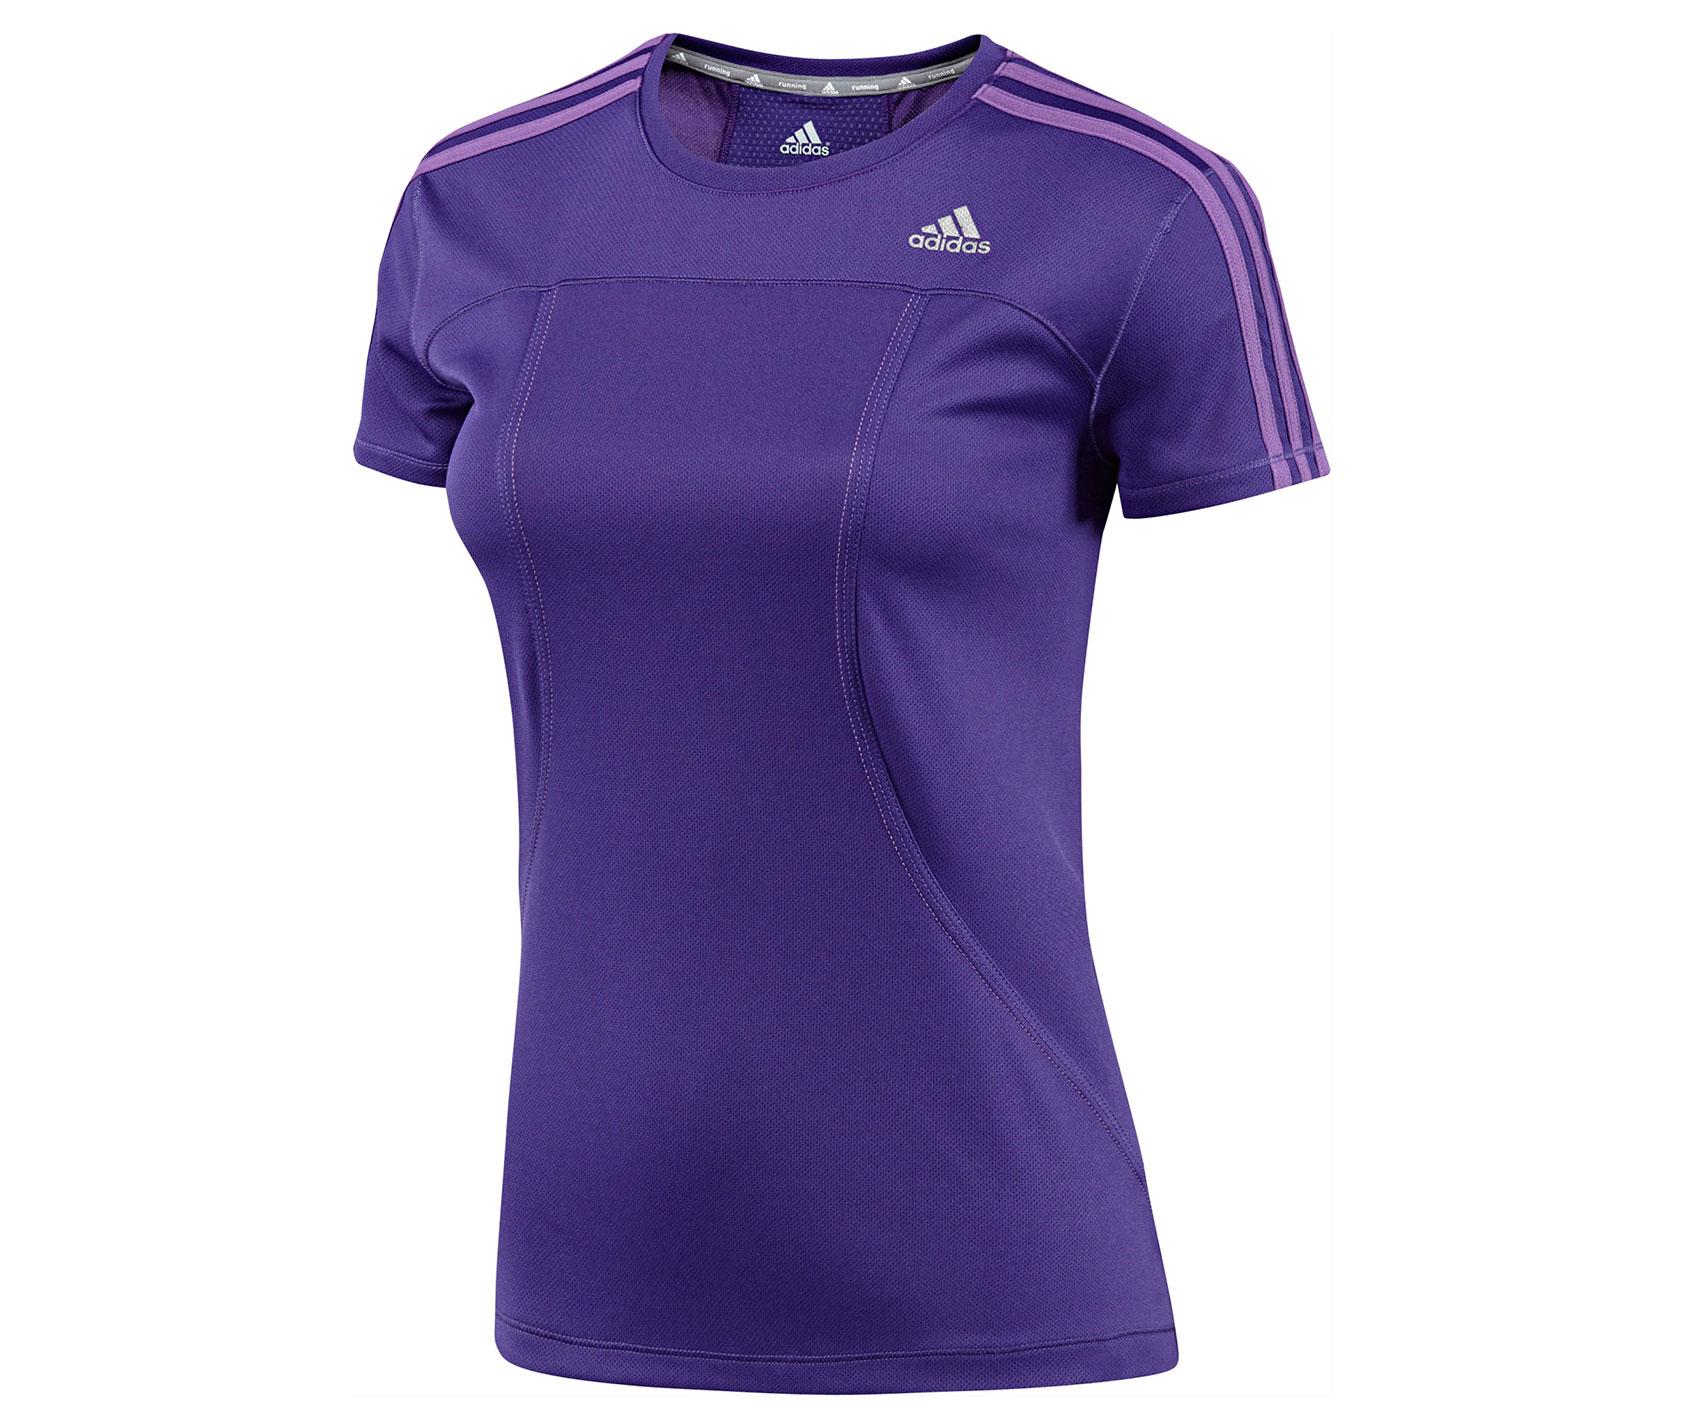 Foto Camiseta Adidas Response 3 Stripes Violeta Mujer